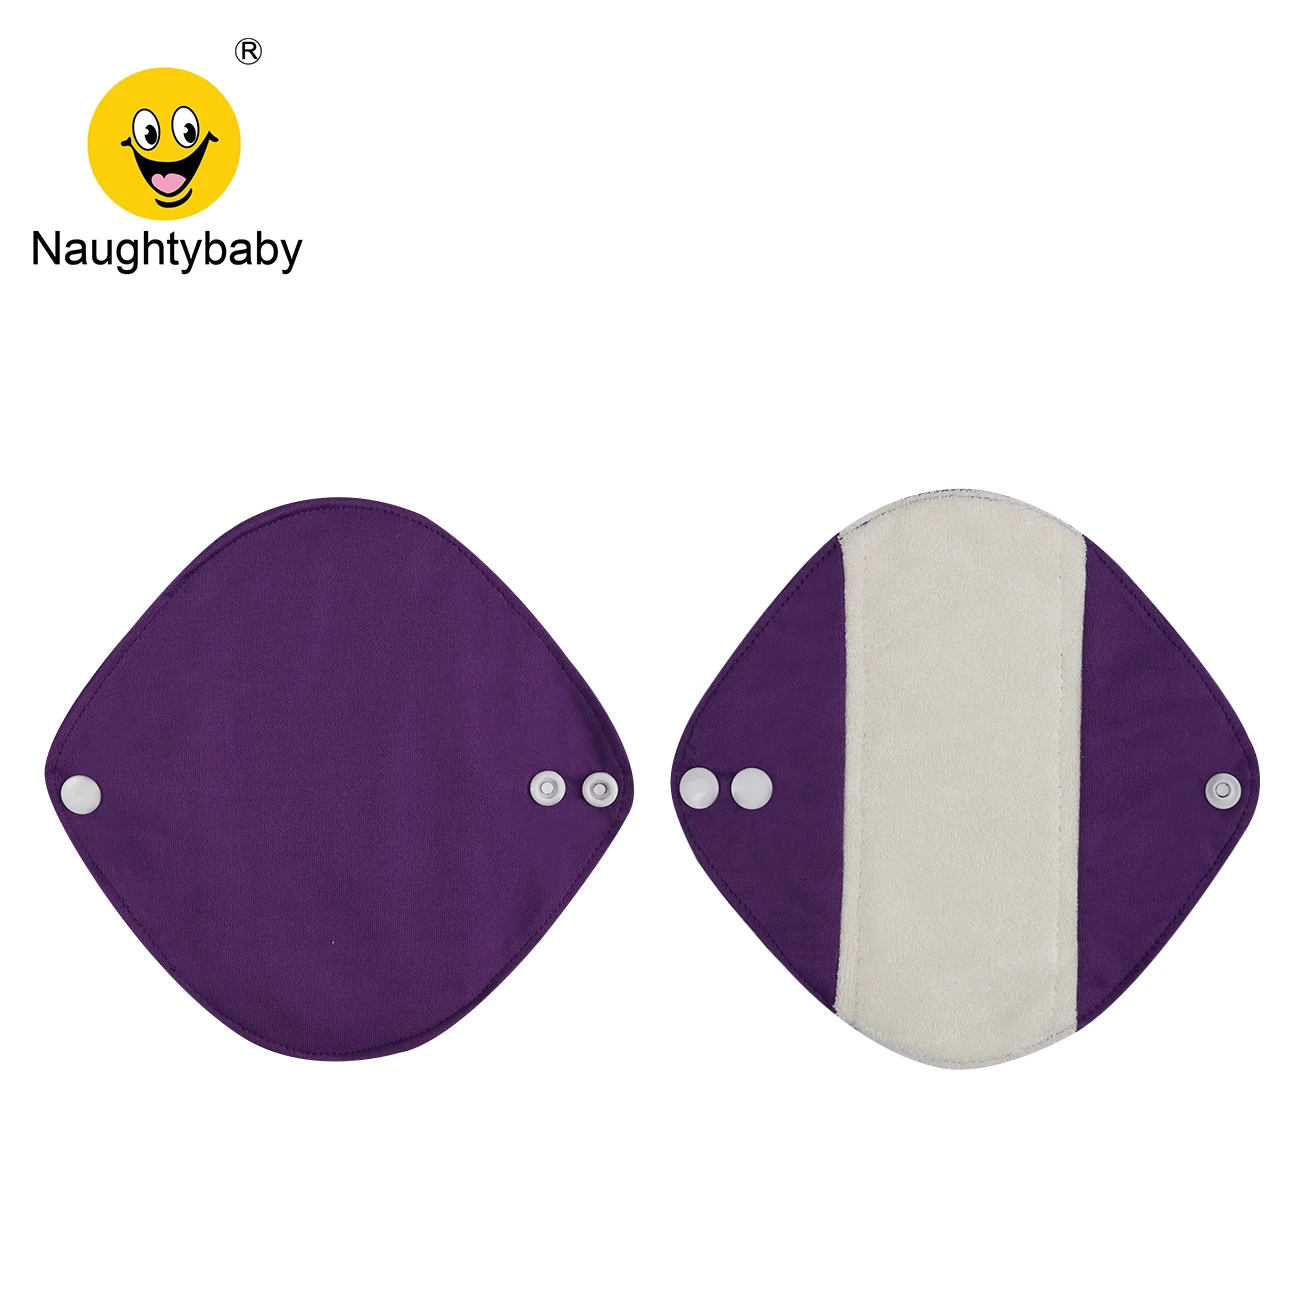 Naughtybaby  Reusable Bamboo Charcoal Sanitary Pads Regular Flow pads Health higiene feminina Menstrual Cloth Pads SML size